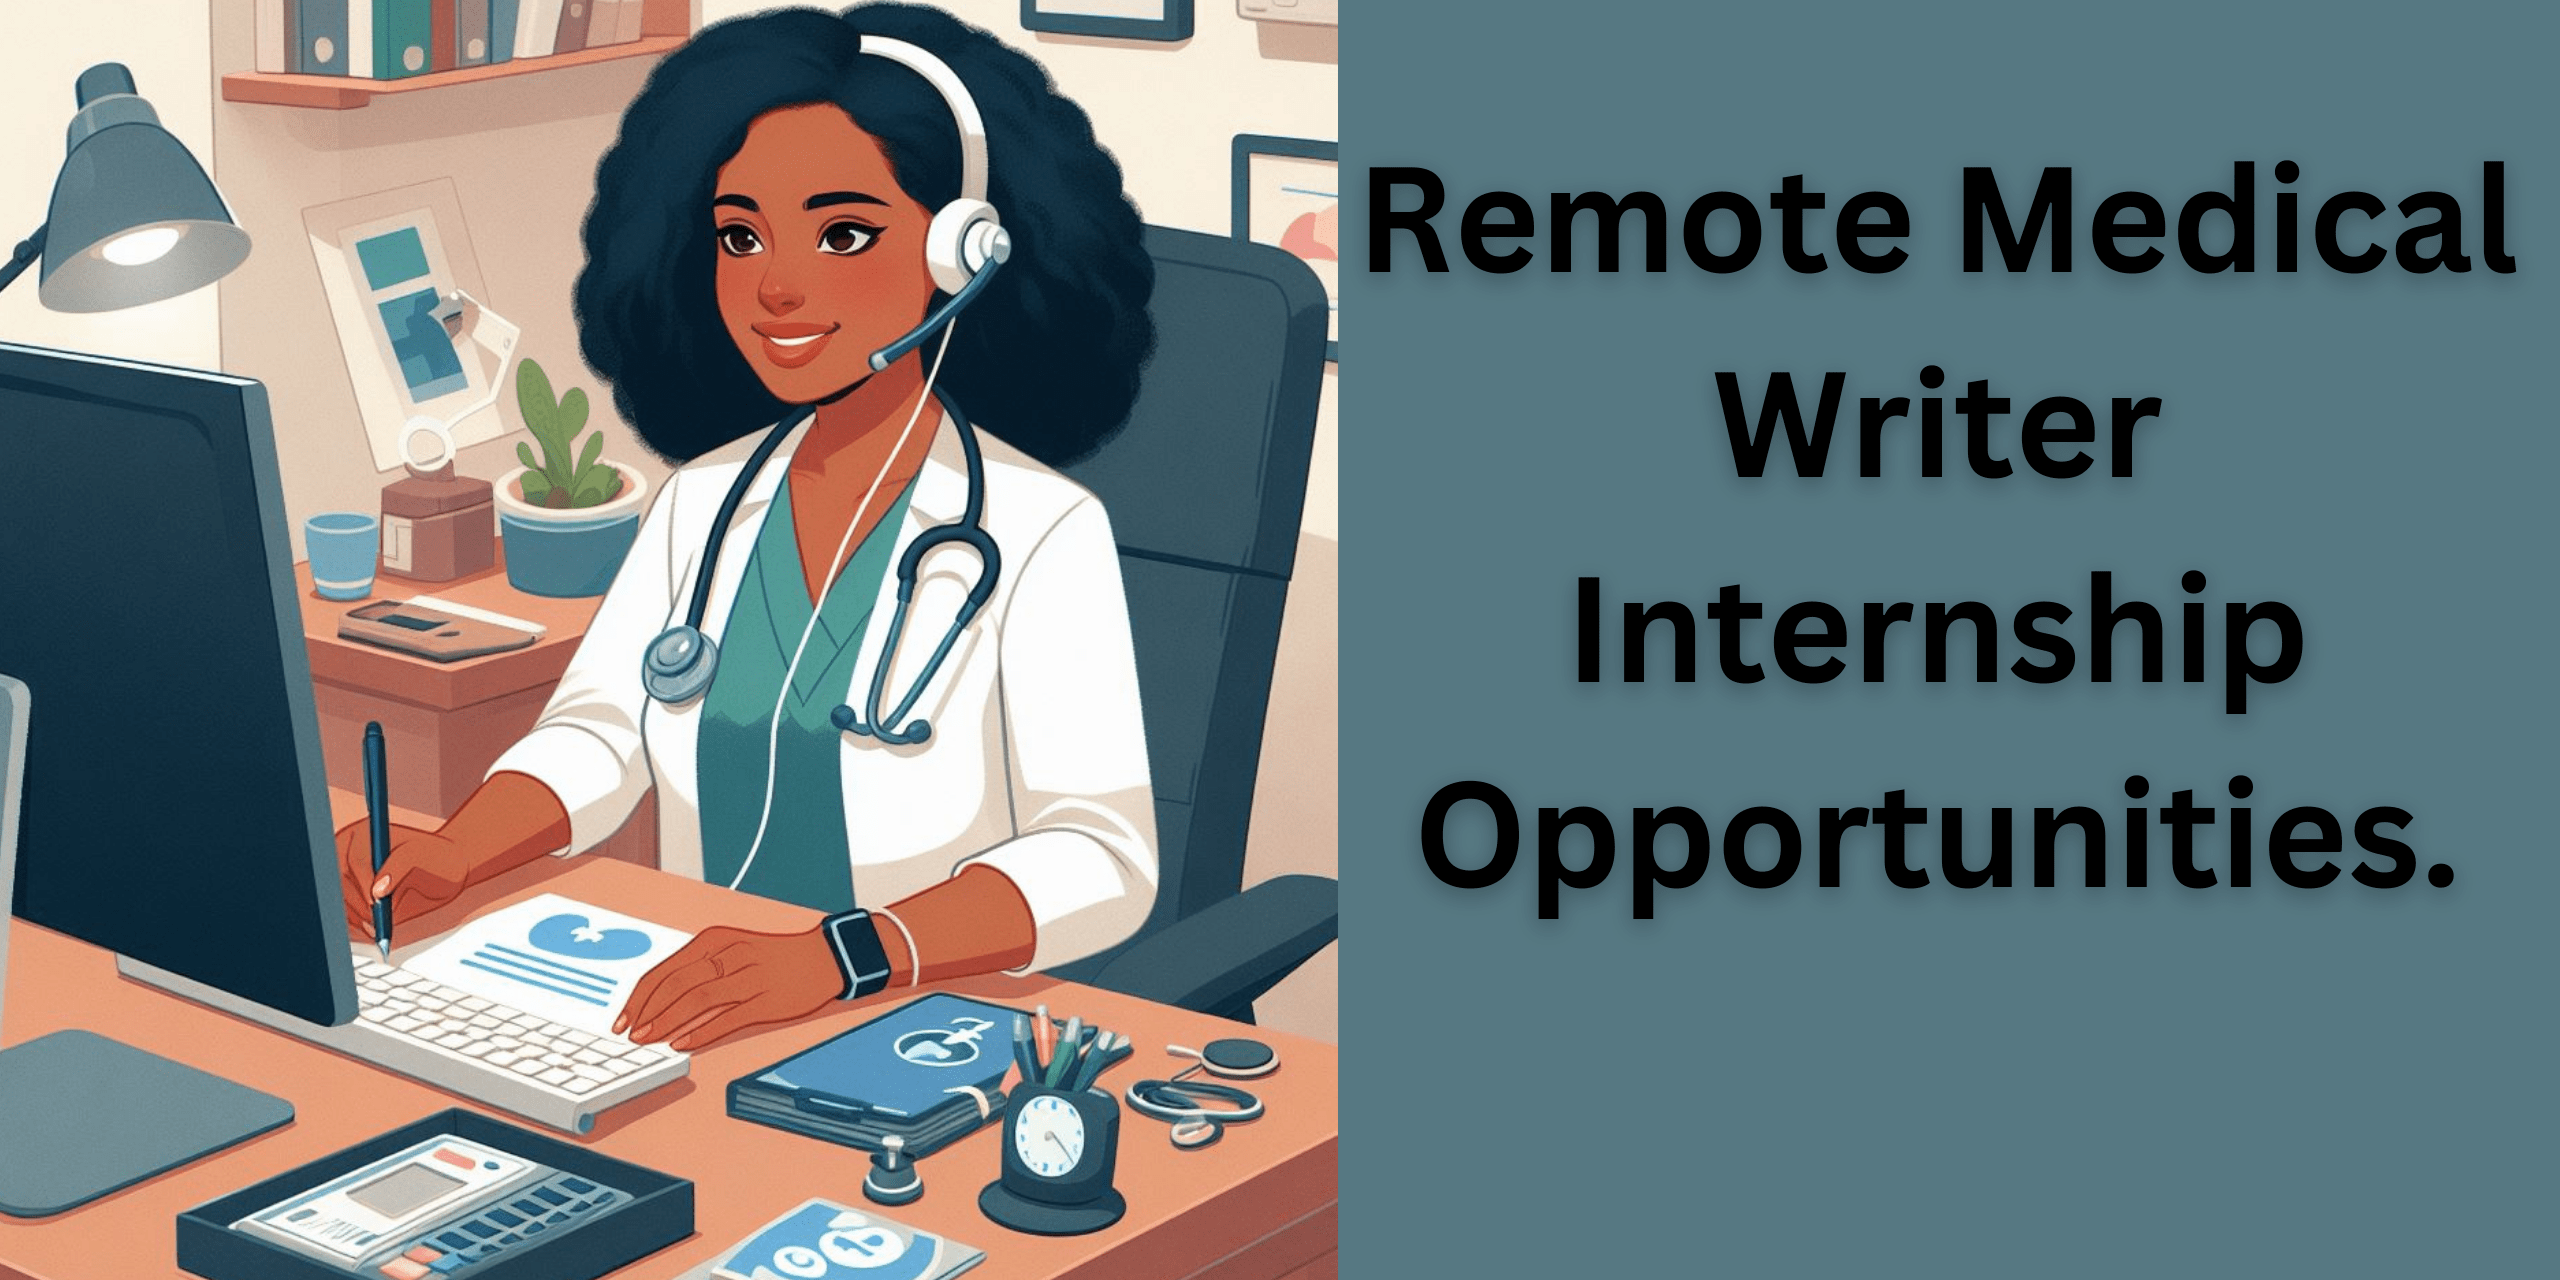 alt="Remote Medical Writer Internship"